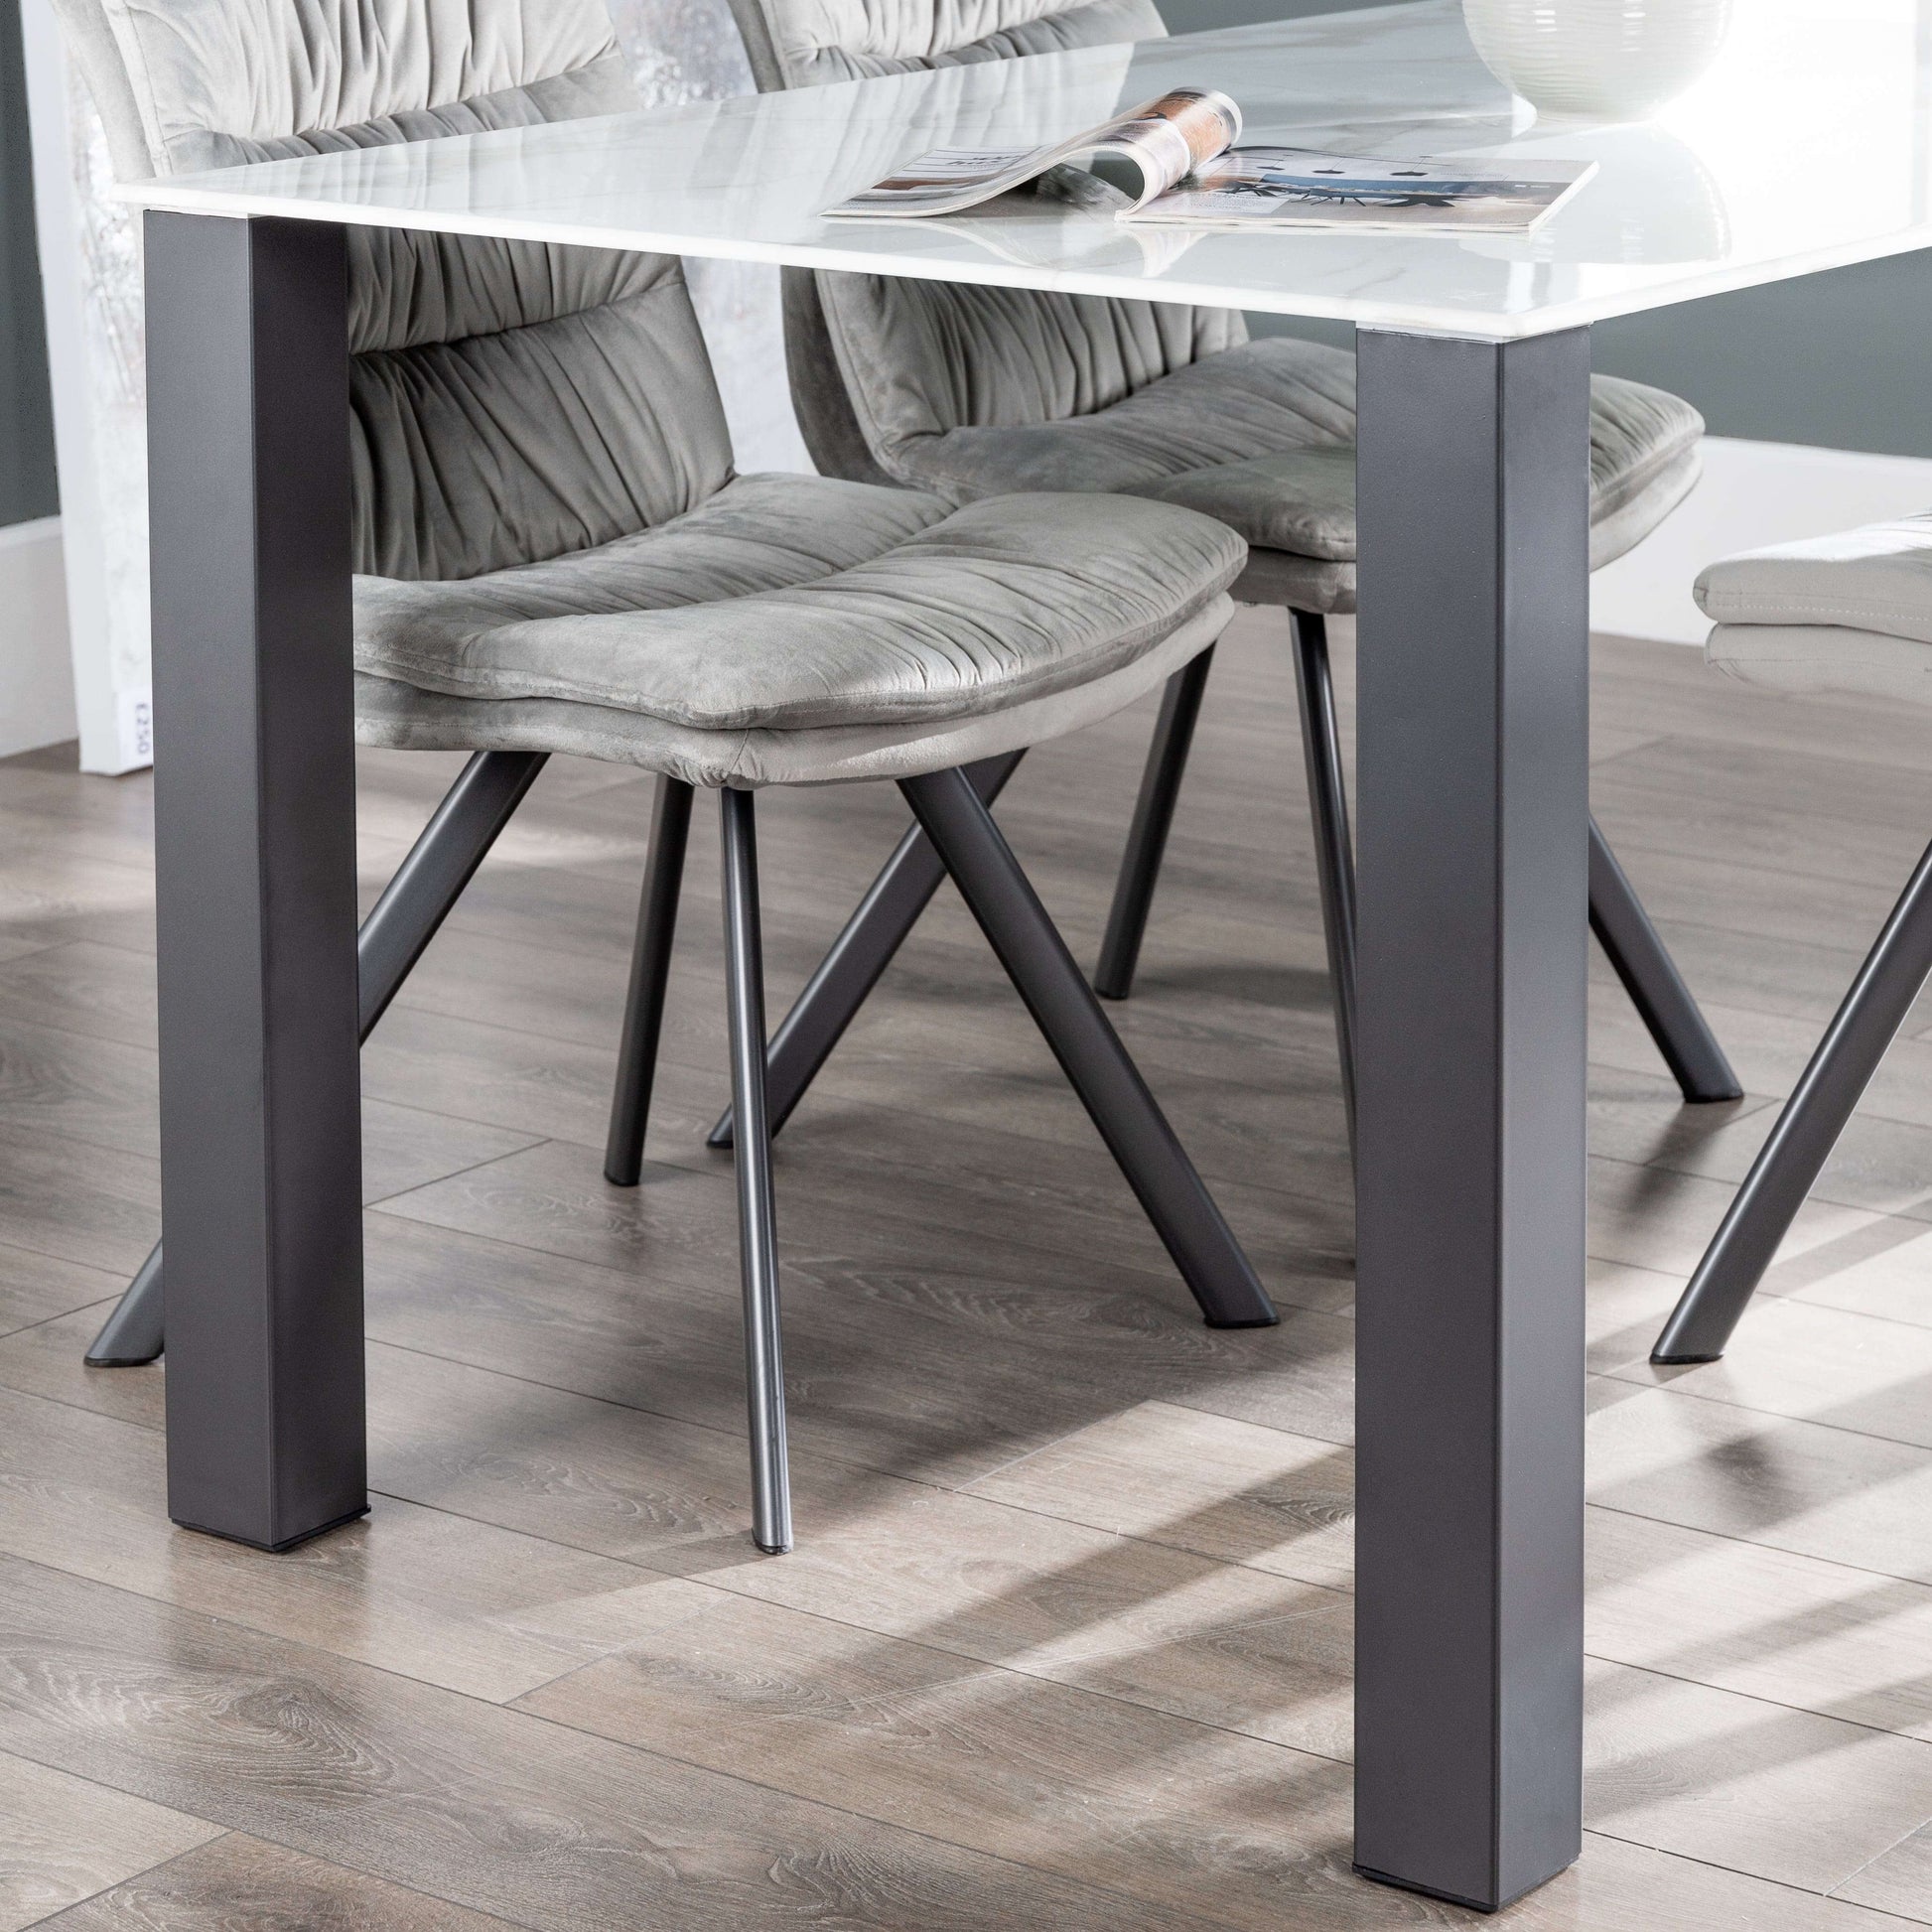 Furniture  -  Axel Rectangular Dining Table  -  60003713